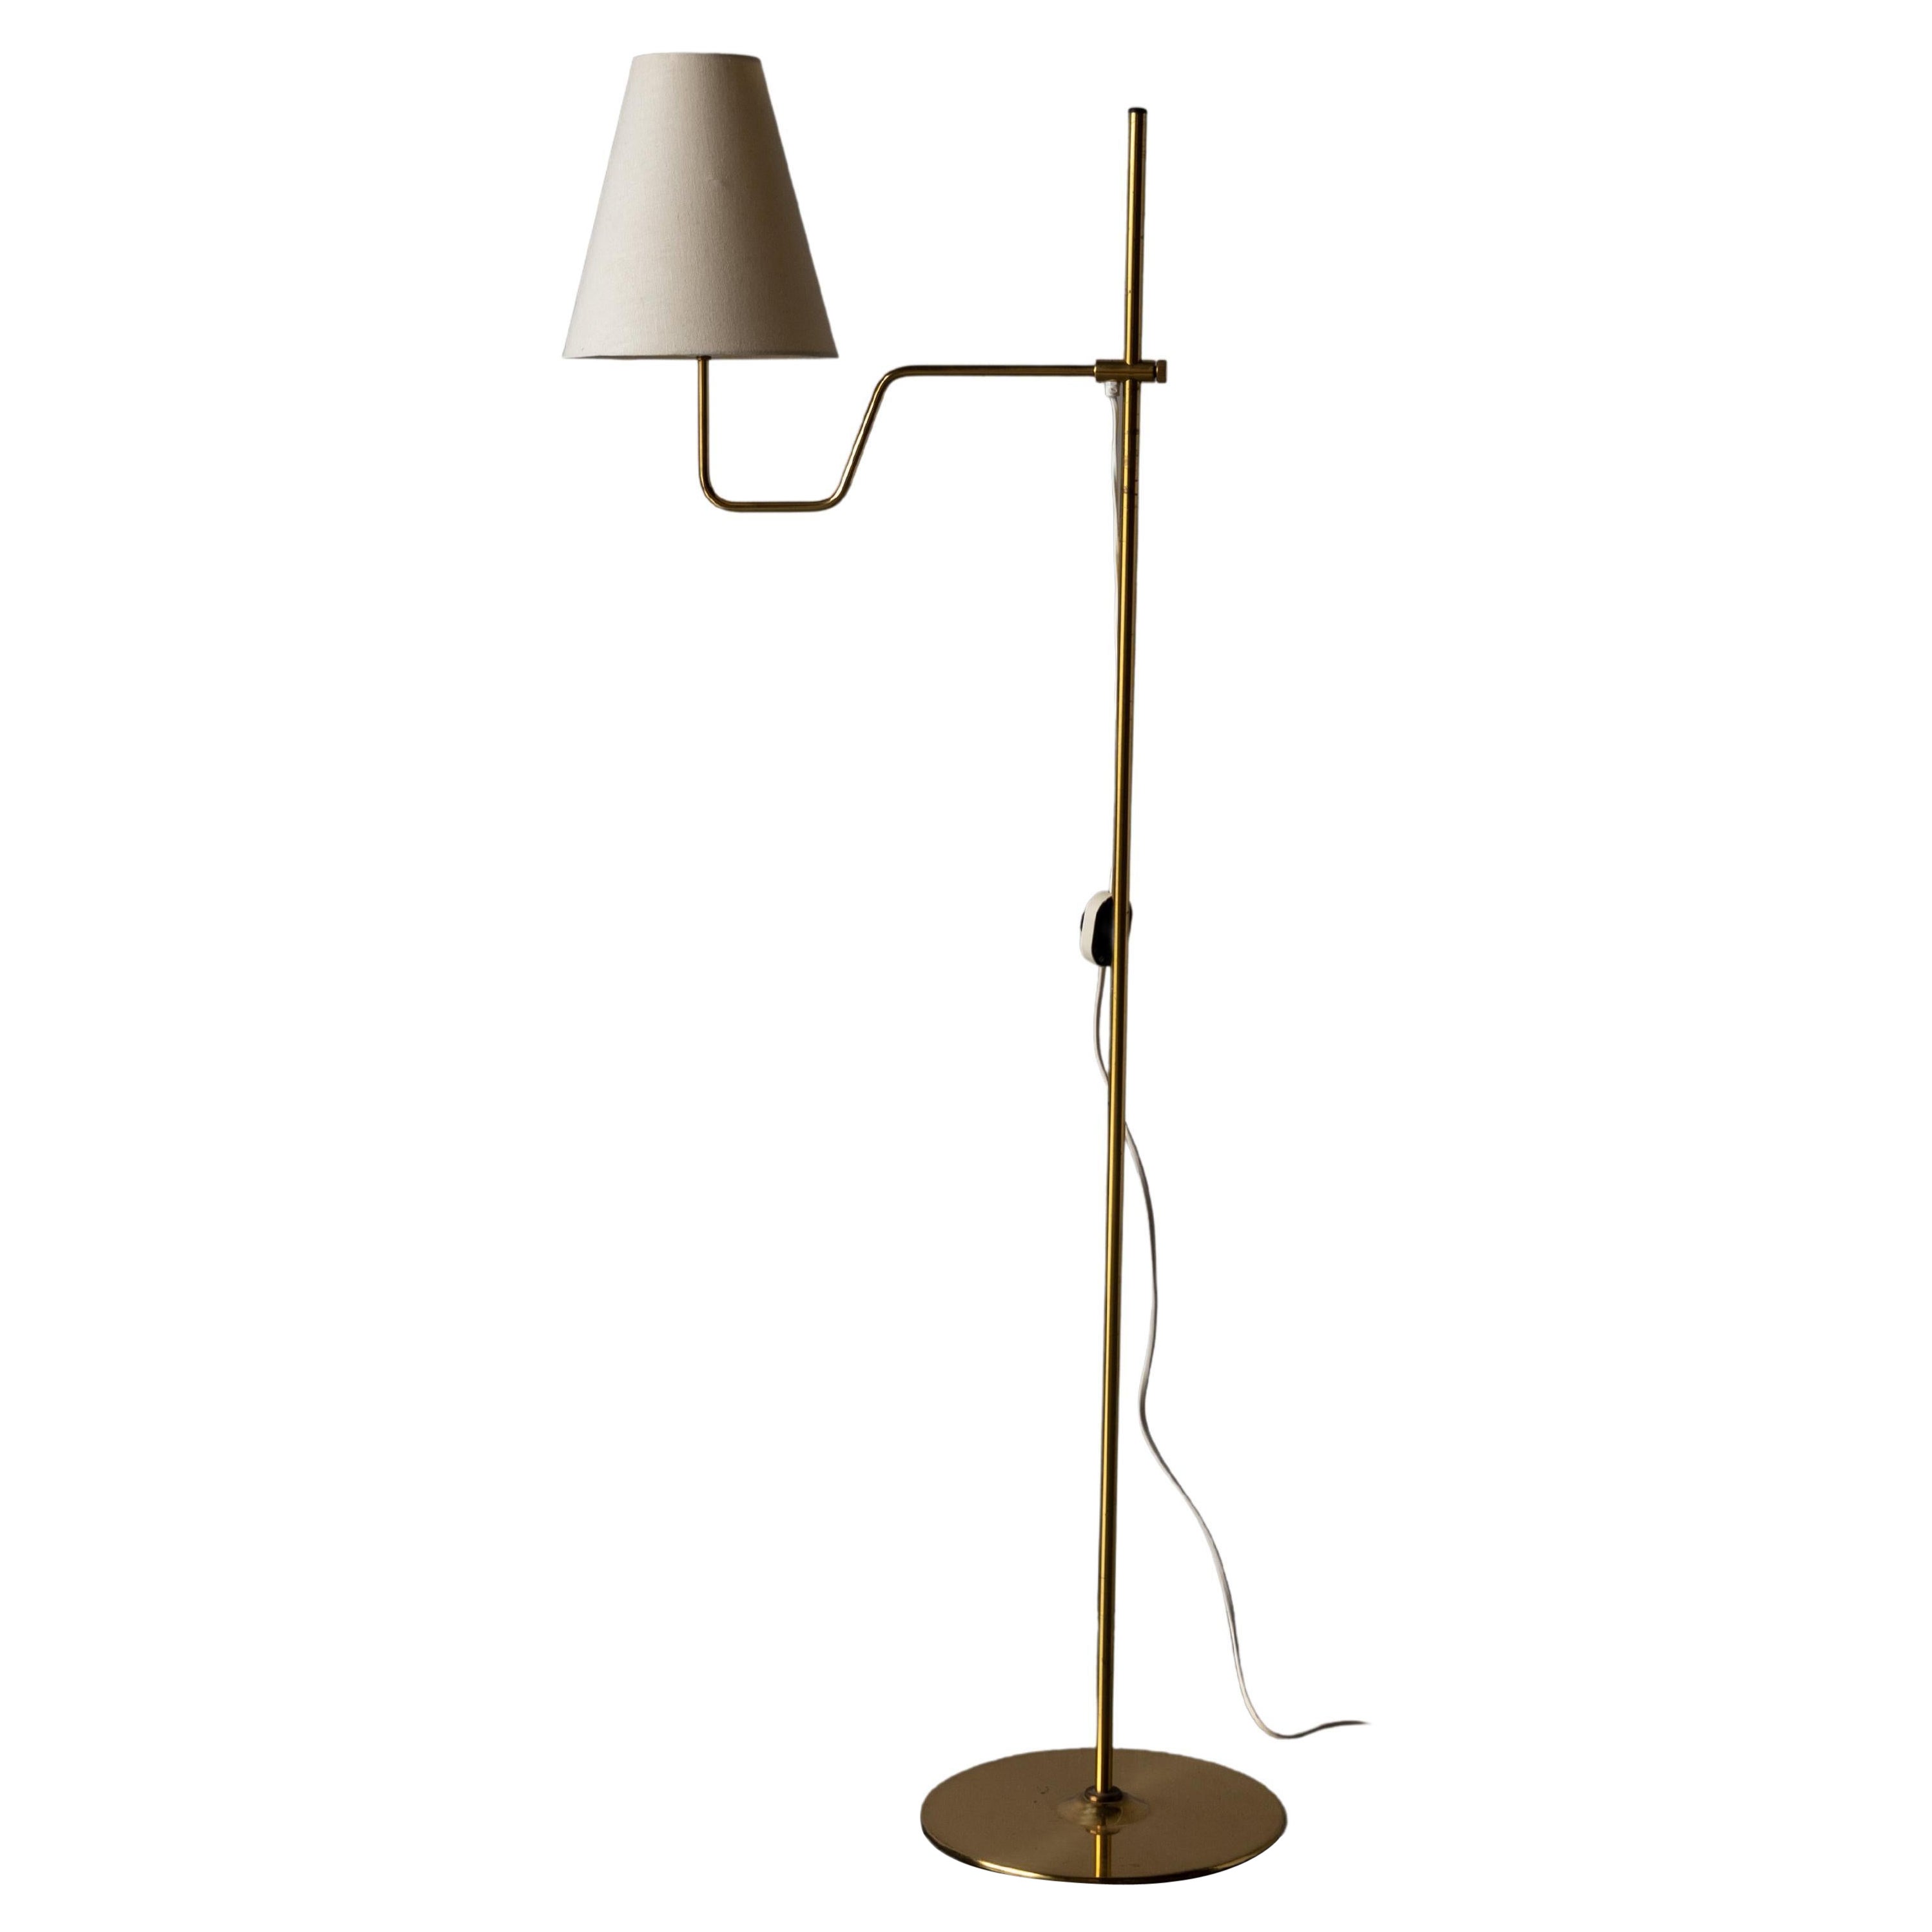 Hans-Agne Jakobsson, Adjustable Floor Lamp, Brass, Fabric, Sweden, c. 1970s